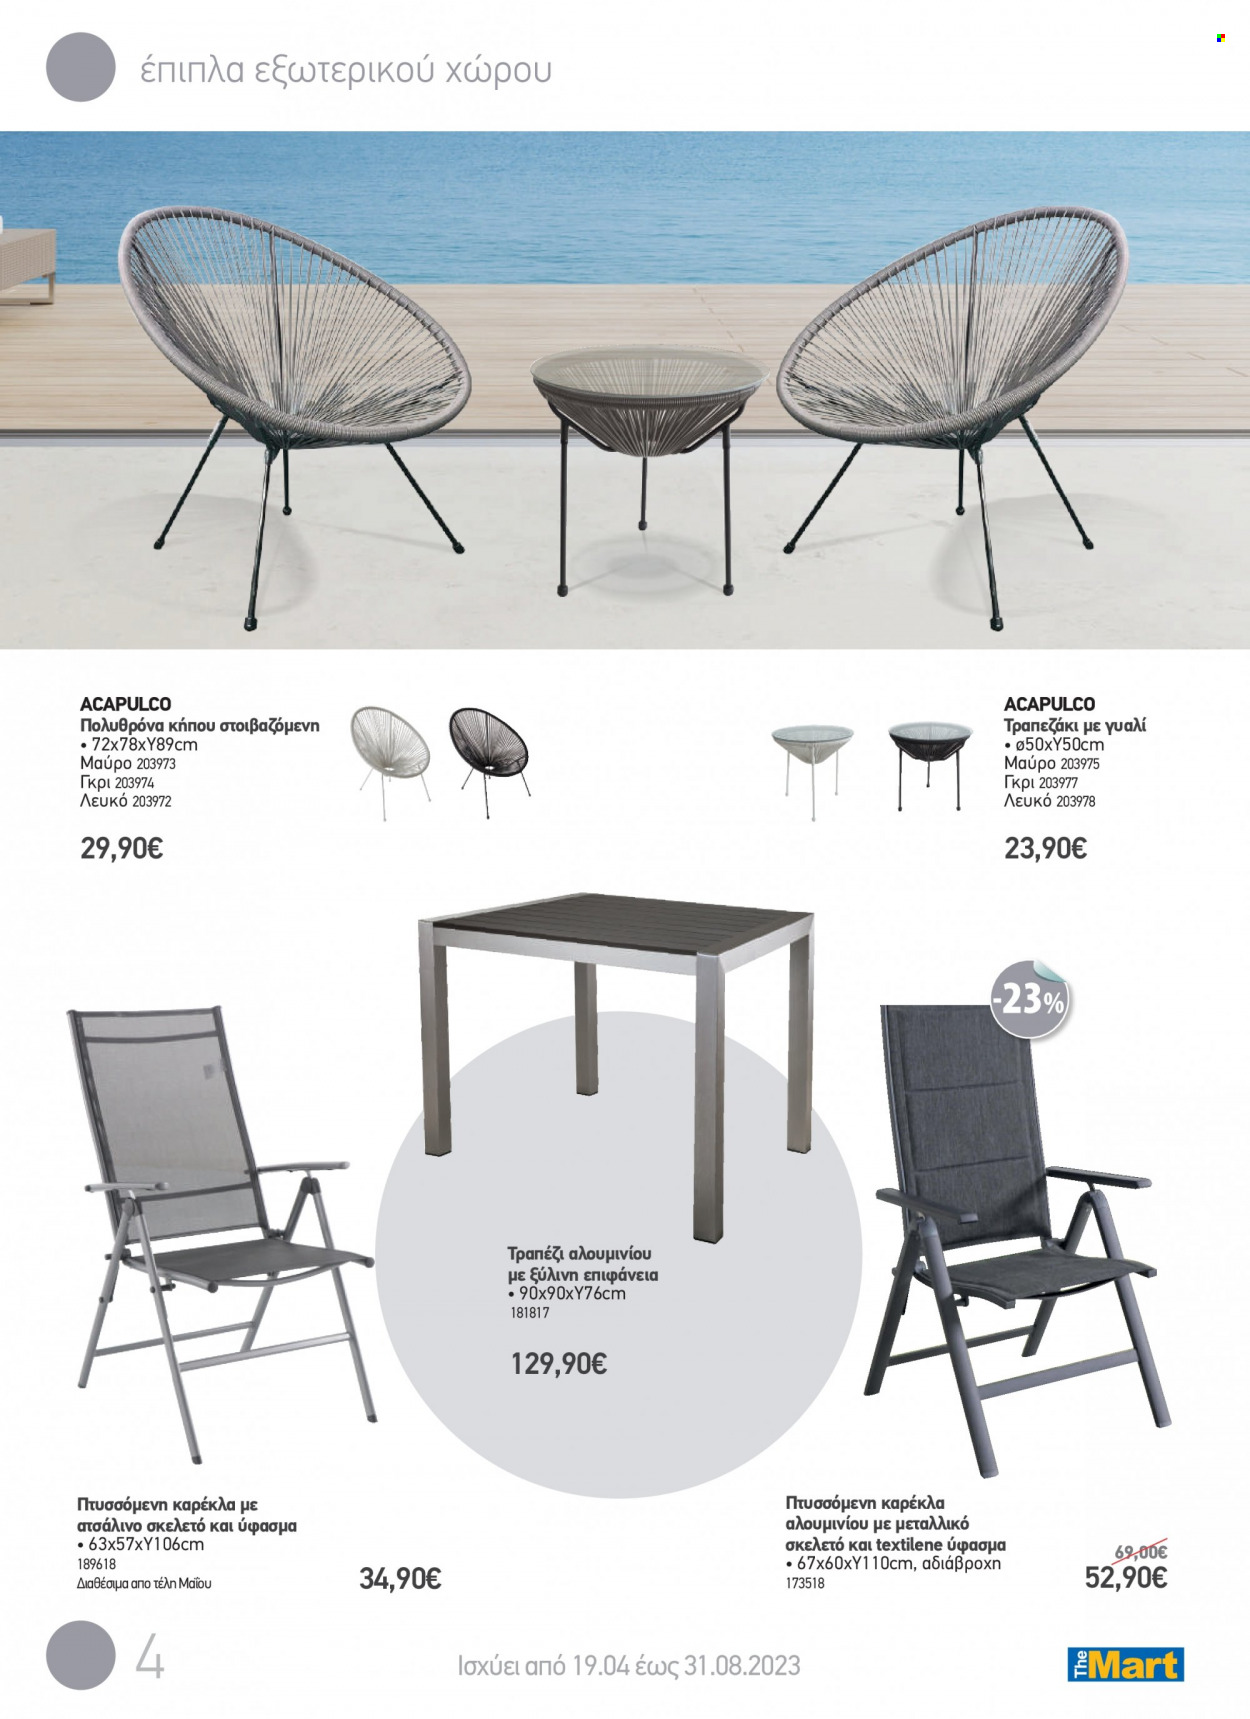 thumbnail - Φυλλάδια The Mart - 19.04.2023 - 31.08.2023 - Εκπτωτικά προϊόντα - τραπέζι, καρέκλα, έπιπλα εξωτερικου χωρου, έπιπλα κήπου. Σελίδα 4.